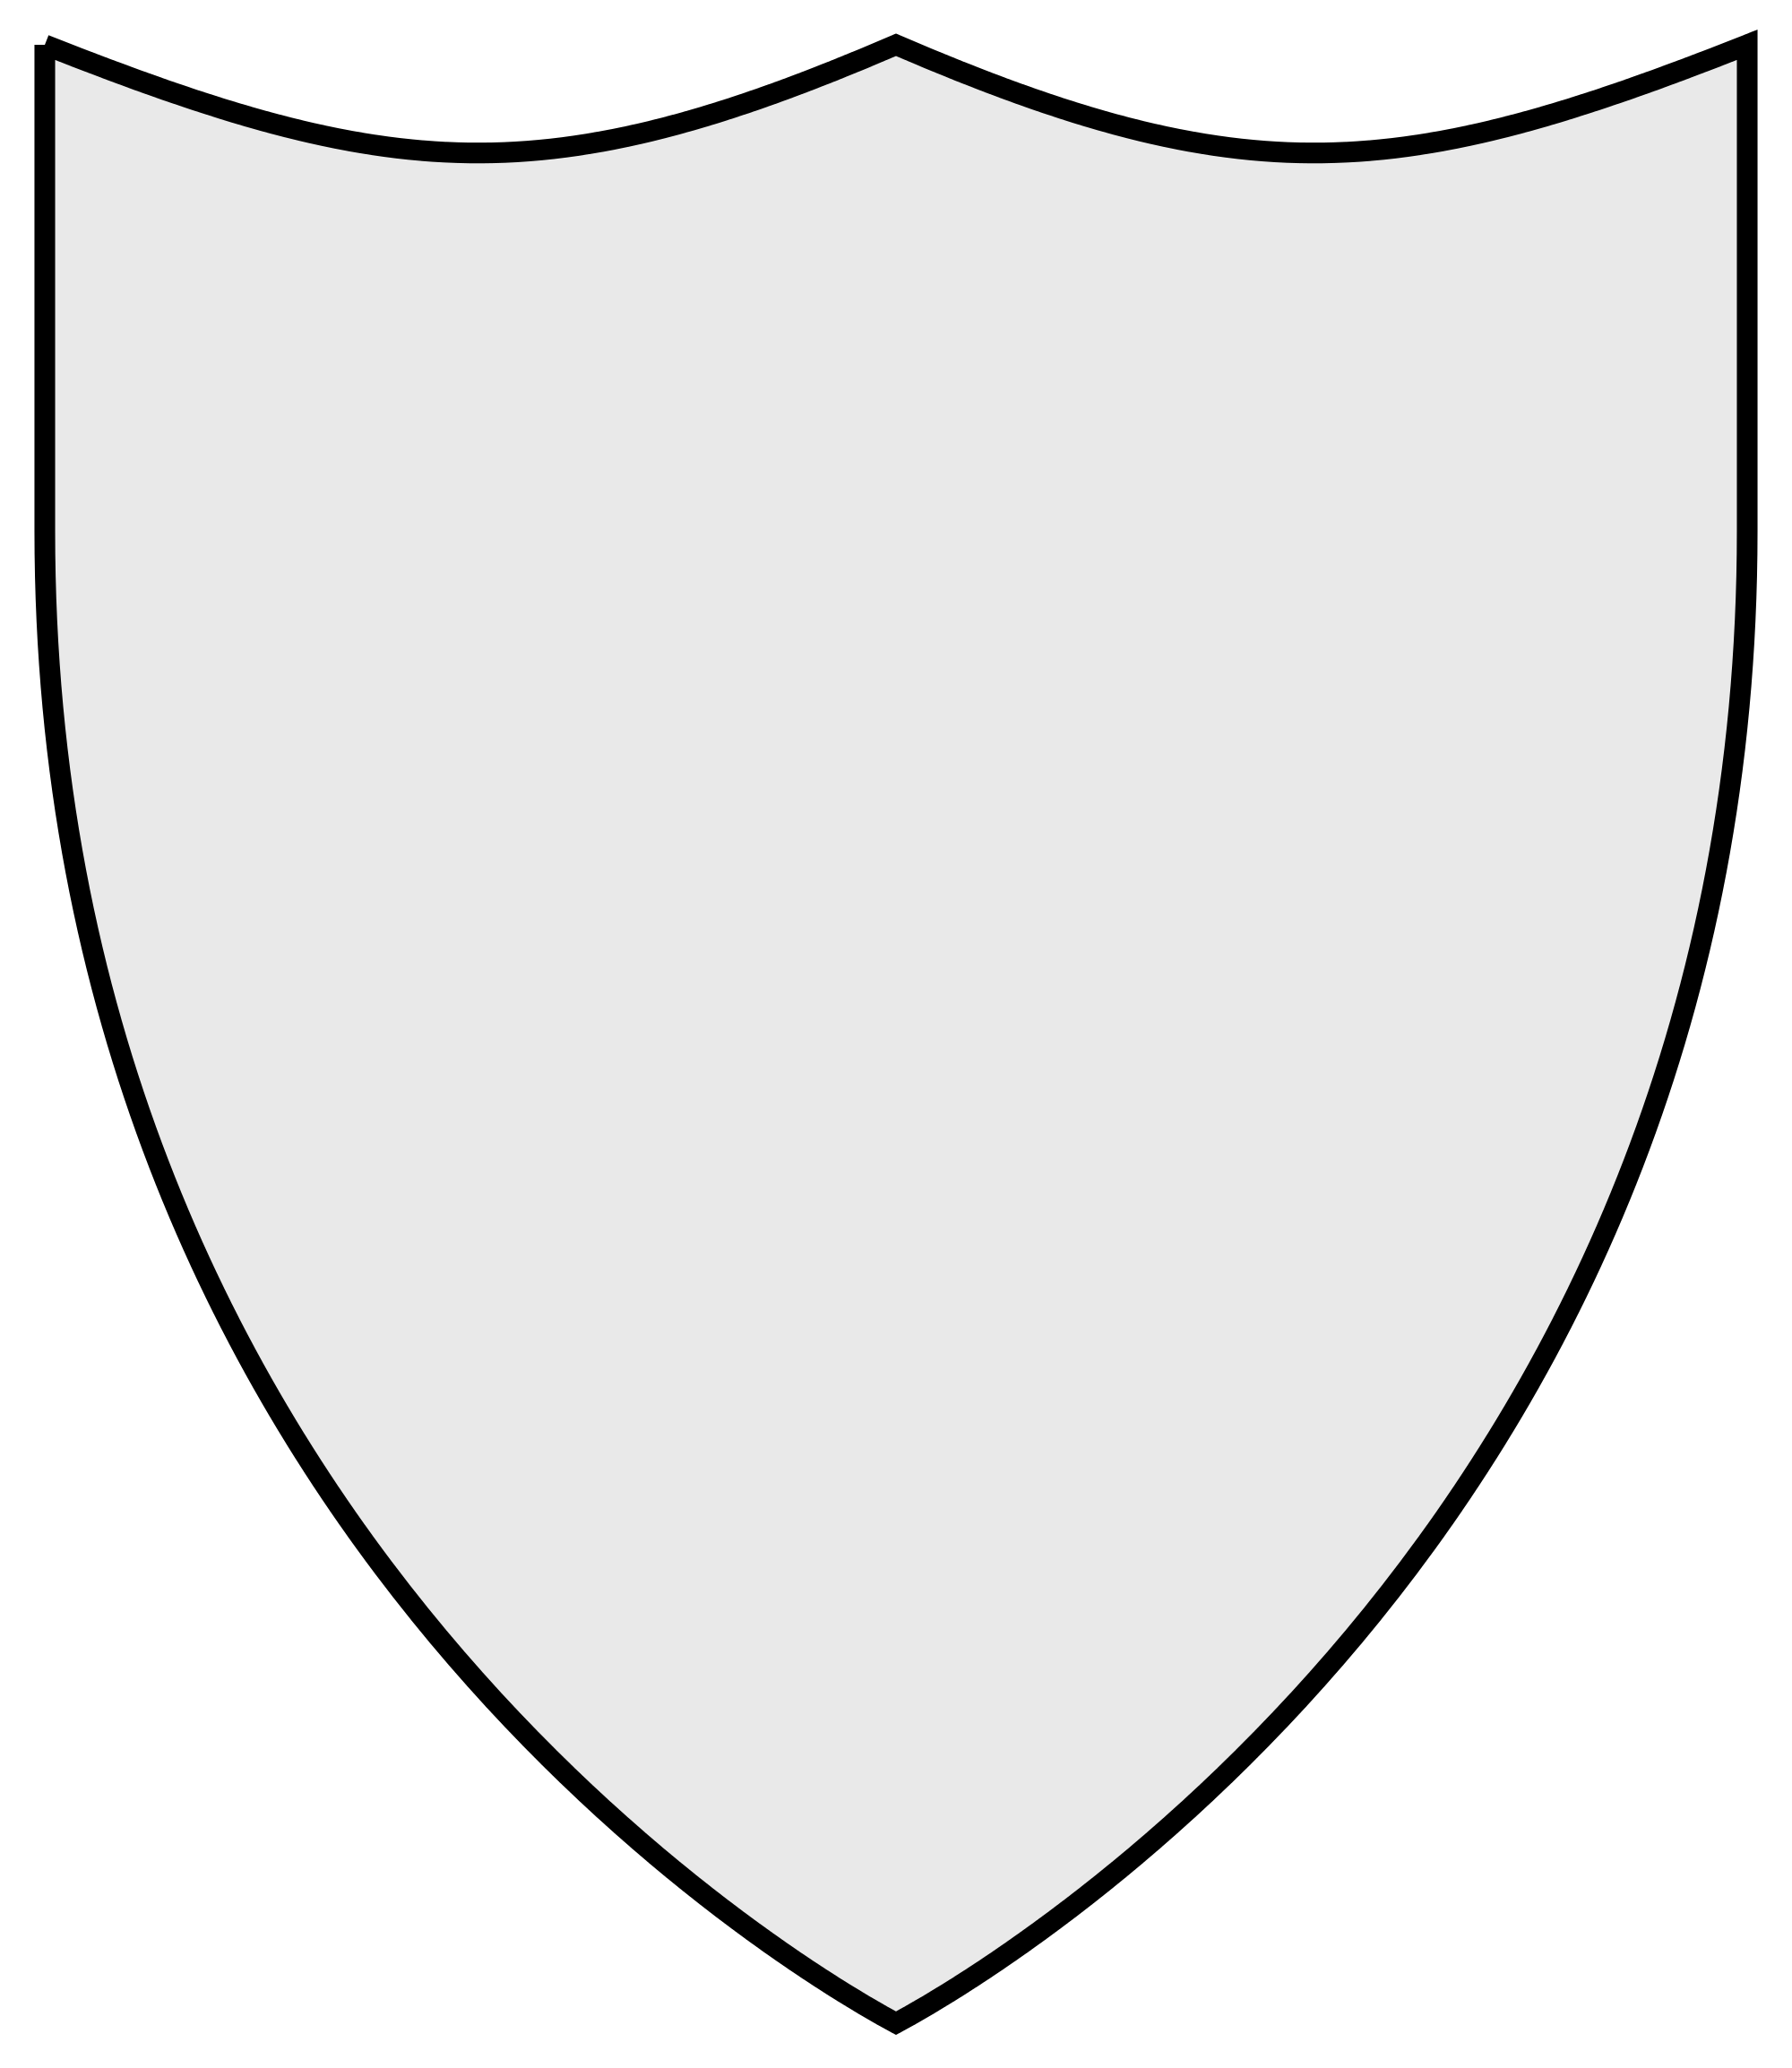 Clipart shield shield shape, Clipart shield shield shape Transparent